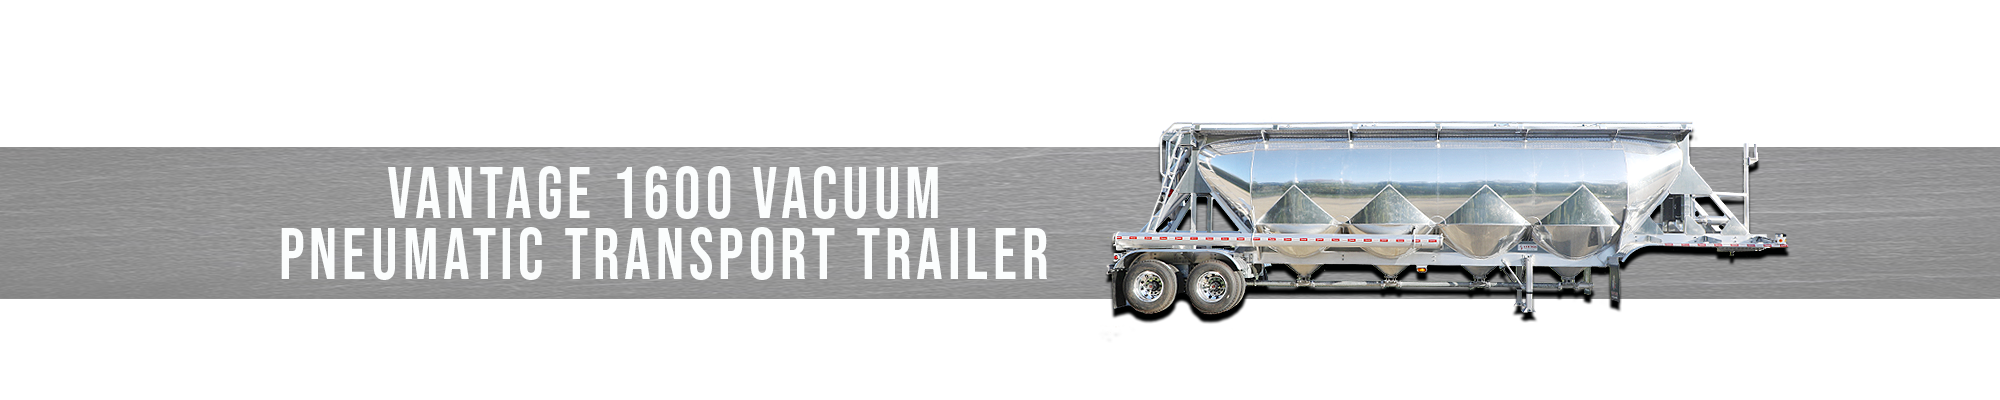 1600 vacuum pneumatic transport trailer for mobile